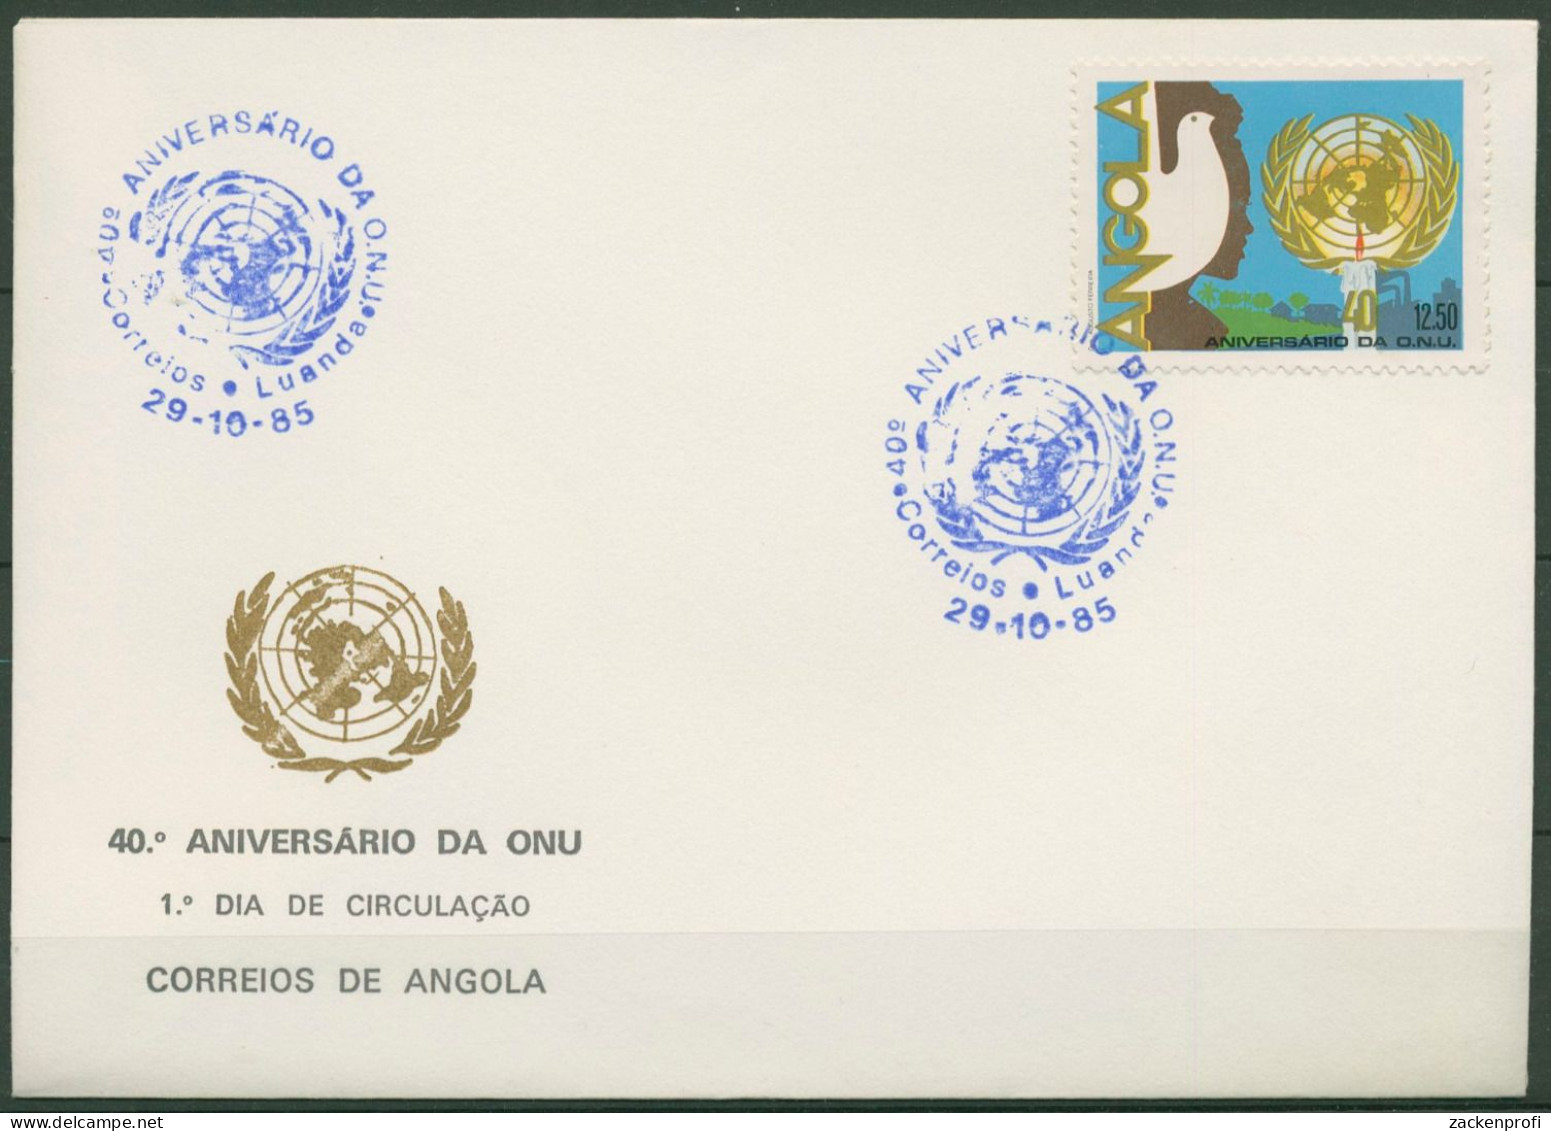 Angola 1985 40 Jahre Vereinte Nationen UNO Friedenstaube 729 FDC (X60986) - Angola